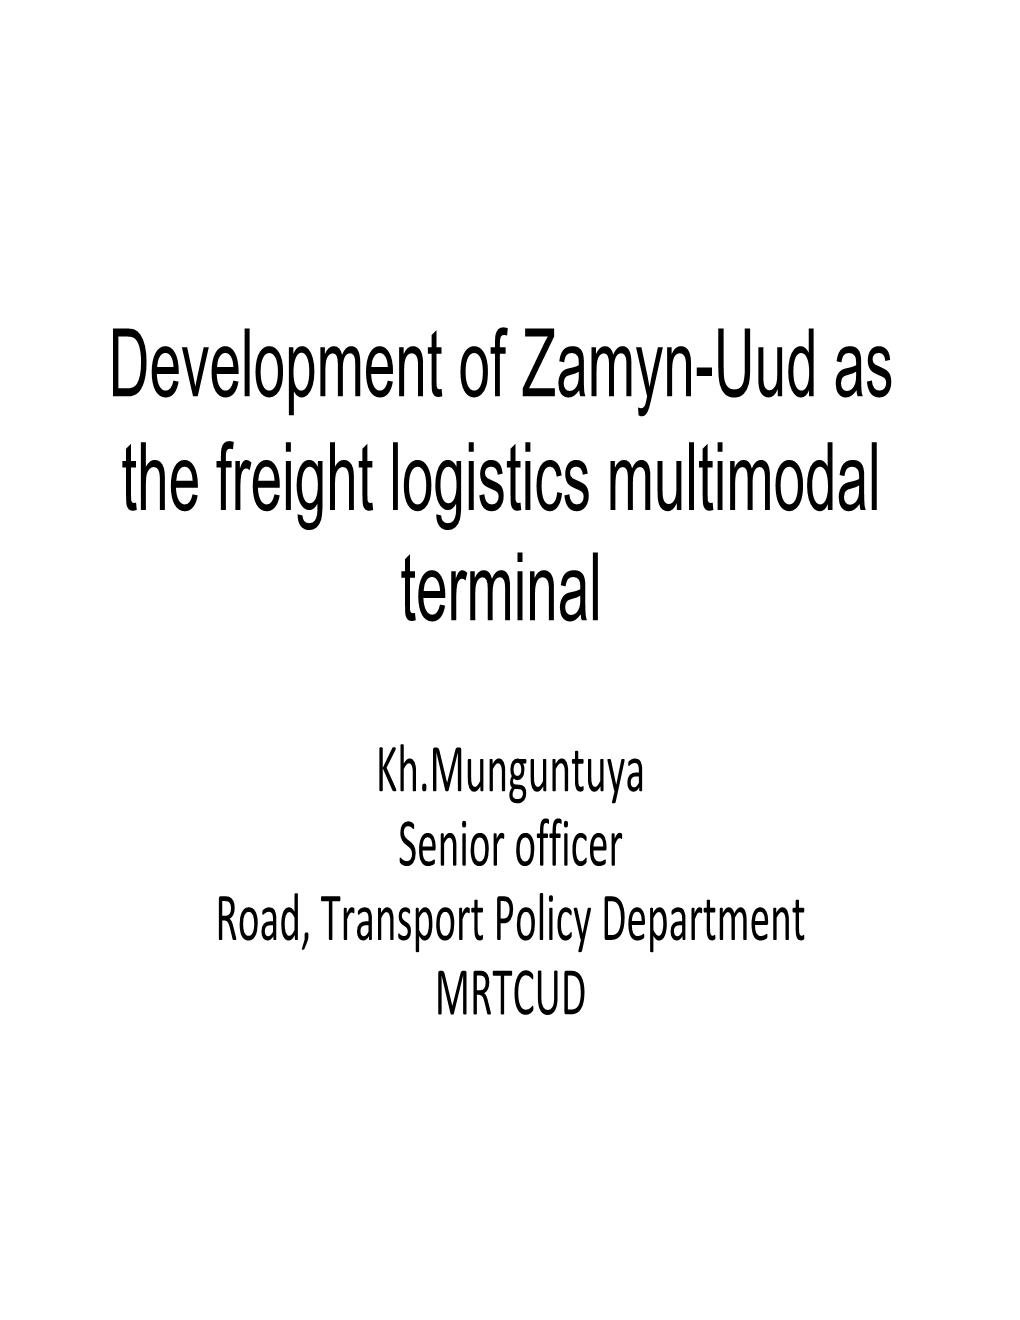 Development of Zamyn-Uud As the Freight Logistics Multimodal Terminal